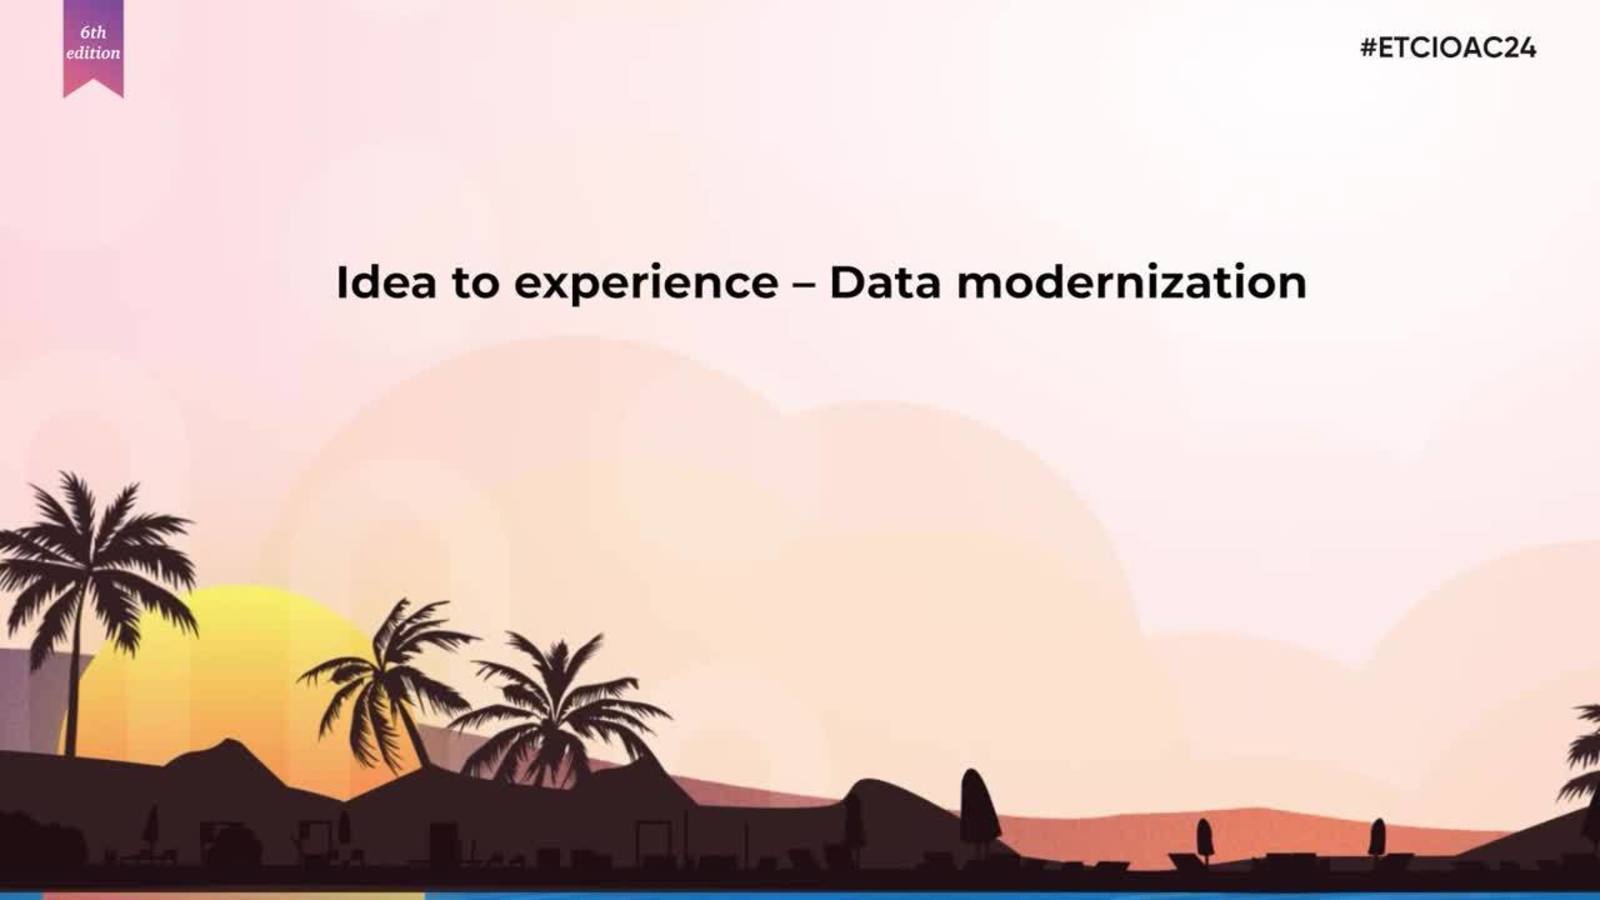 Kyndryl’s path to data modernization: Insights from idea to experience [Video]